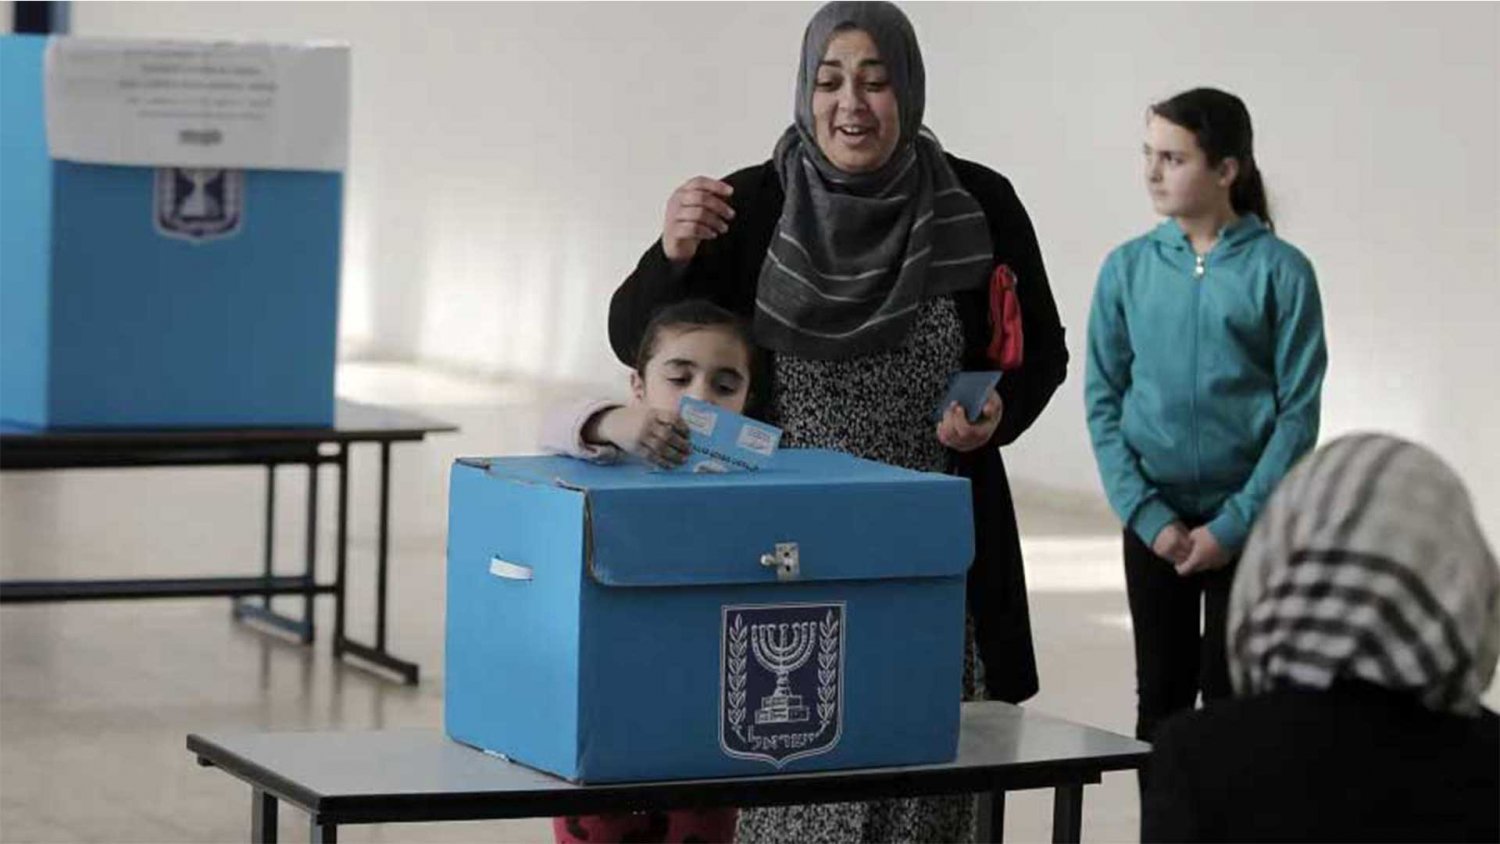 A Palestinian Jerusalemite votes with her child in the Jerusalem municipal elections, 2006